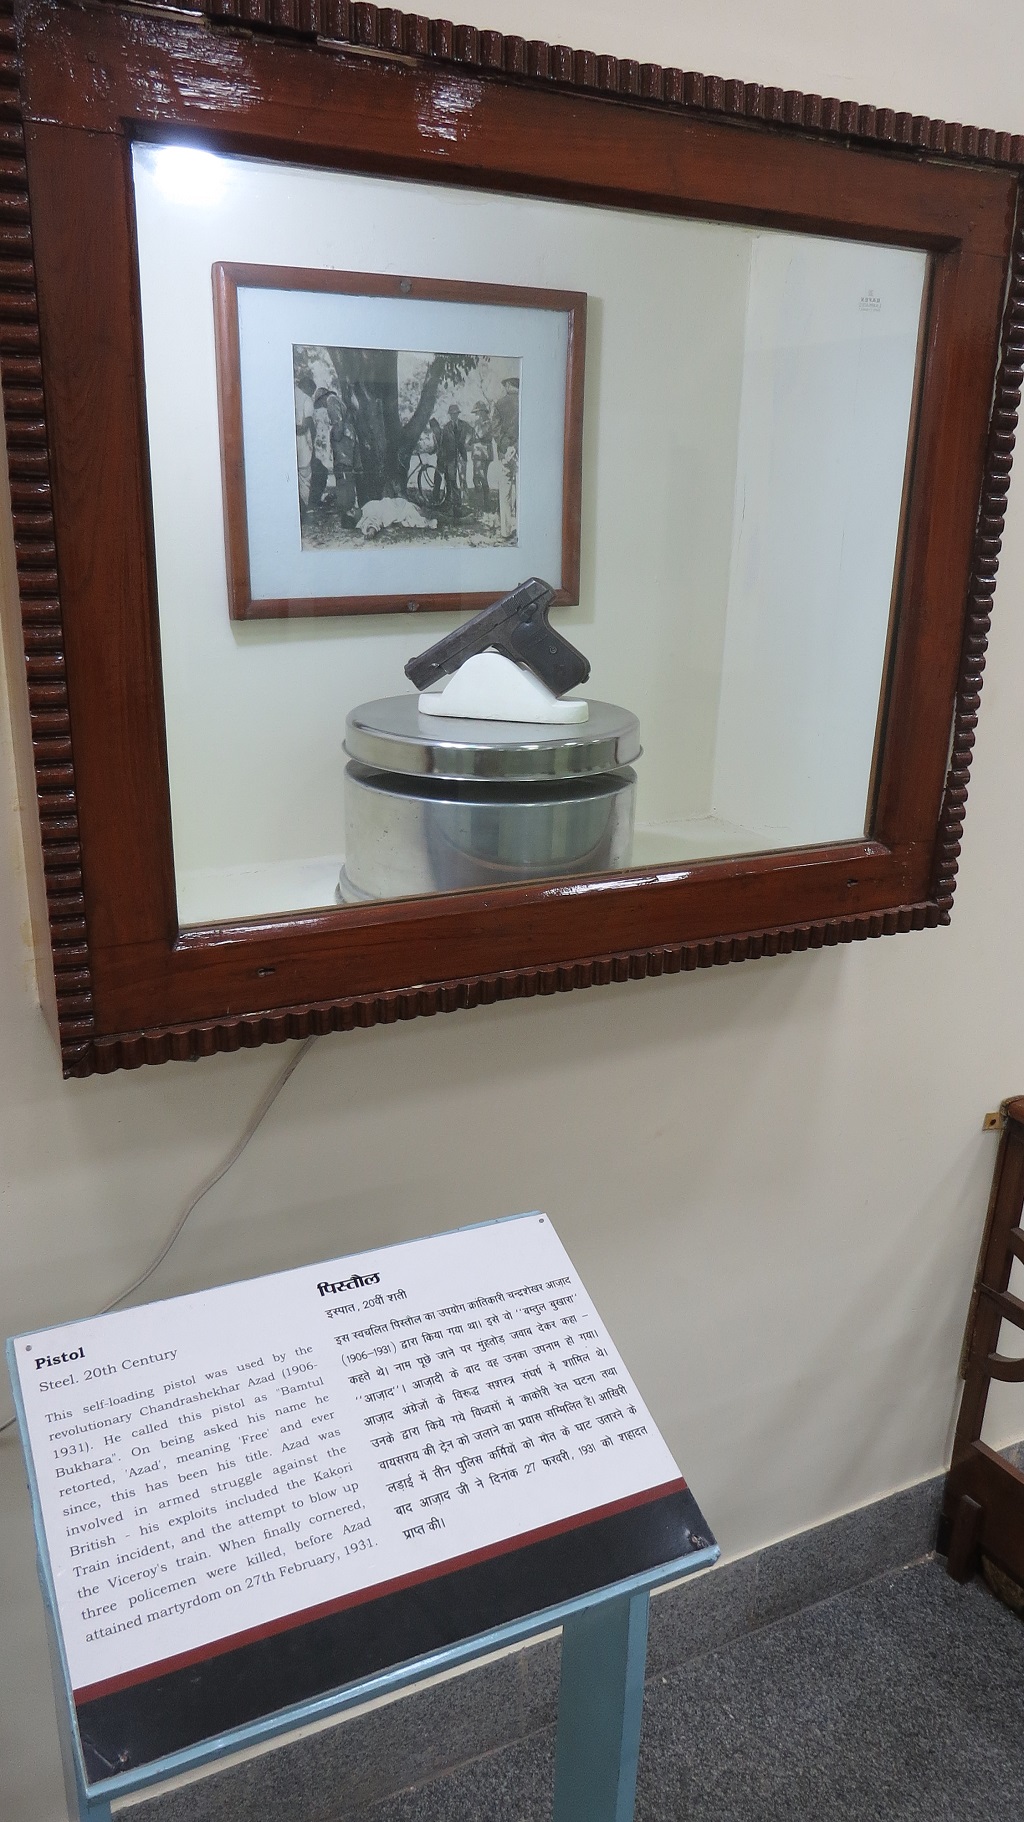 This Self-loading Pistol was Used by The Revolutionary Chandrashekhar Azad Against The British During Freedom Struggle